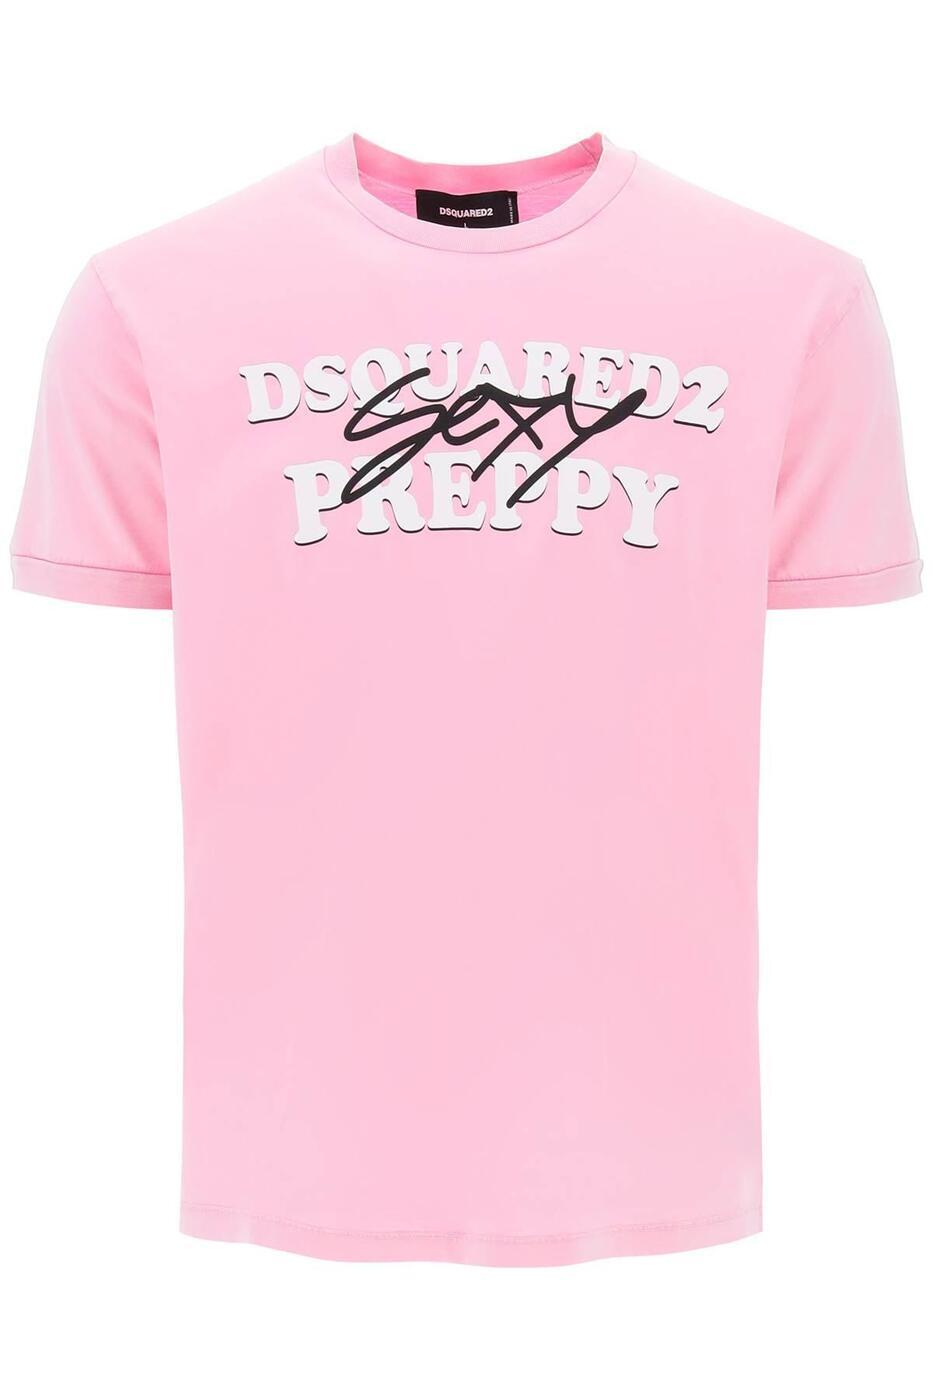 DSQUARED2 ディースクエアード ピンク Pink Tシャツ メンズ 8225363918997 【関税・送料無料】【ラッピング無料】 ba